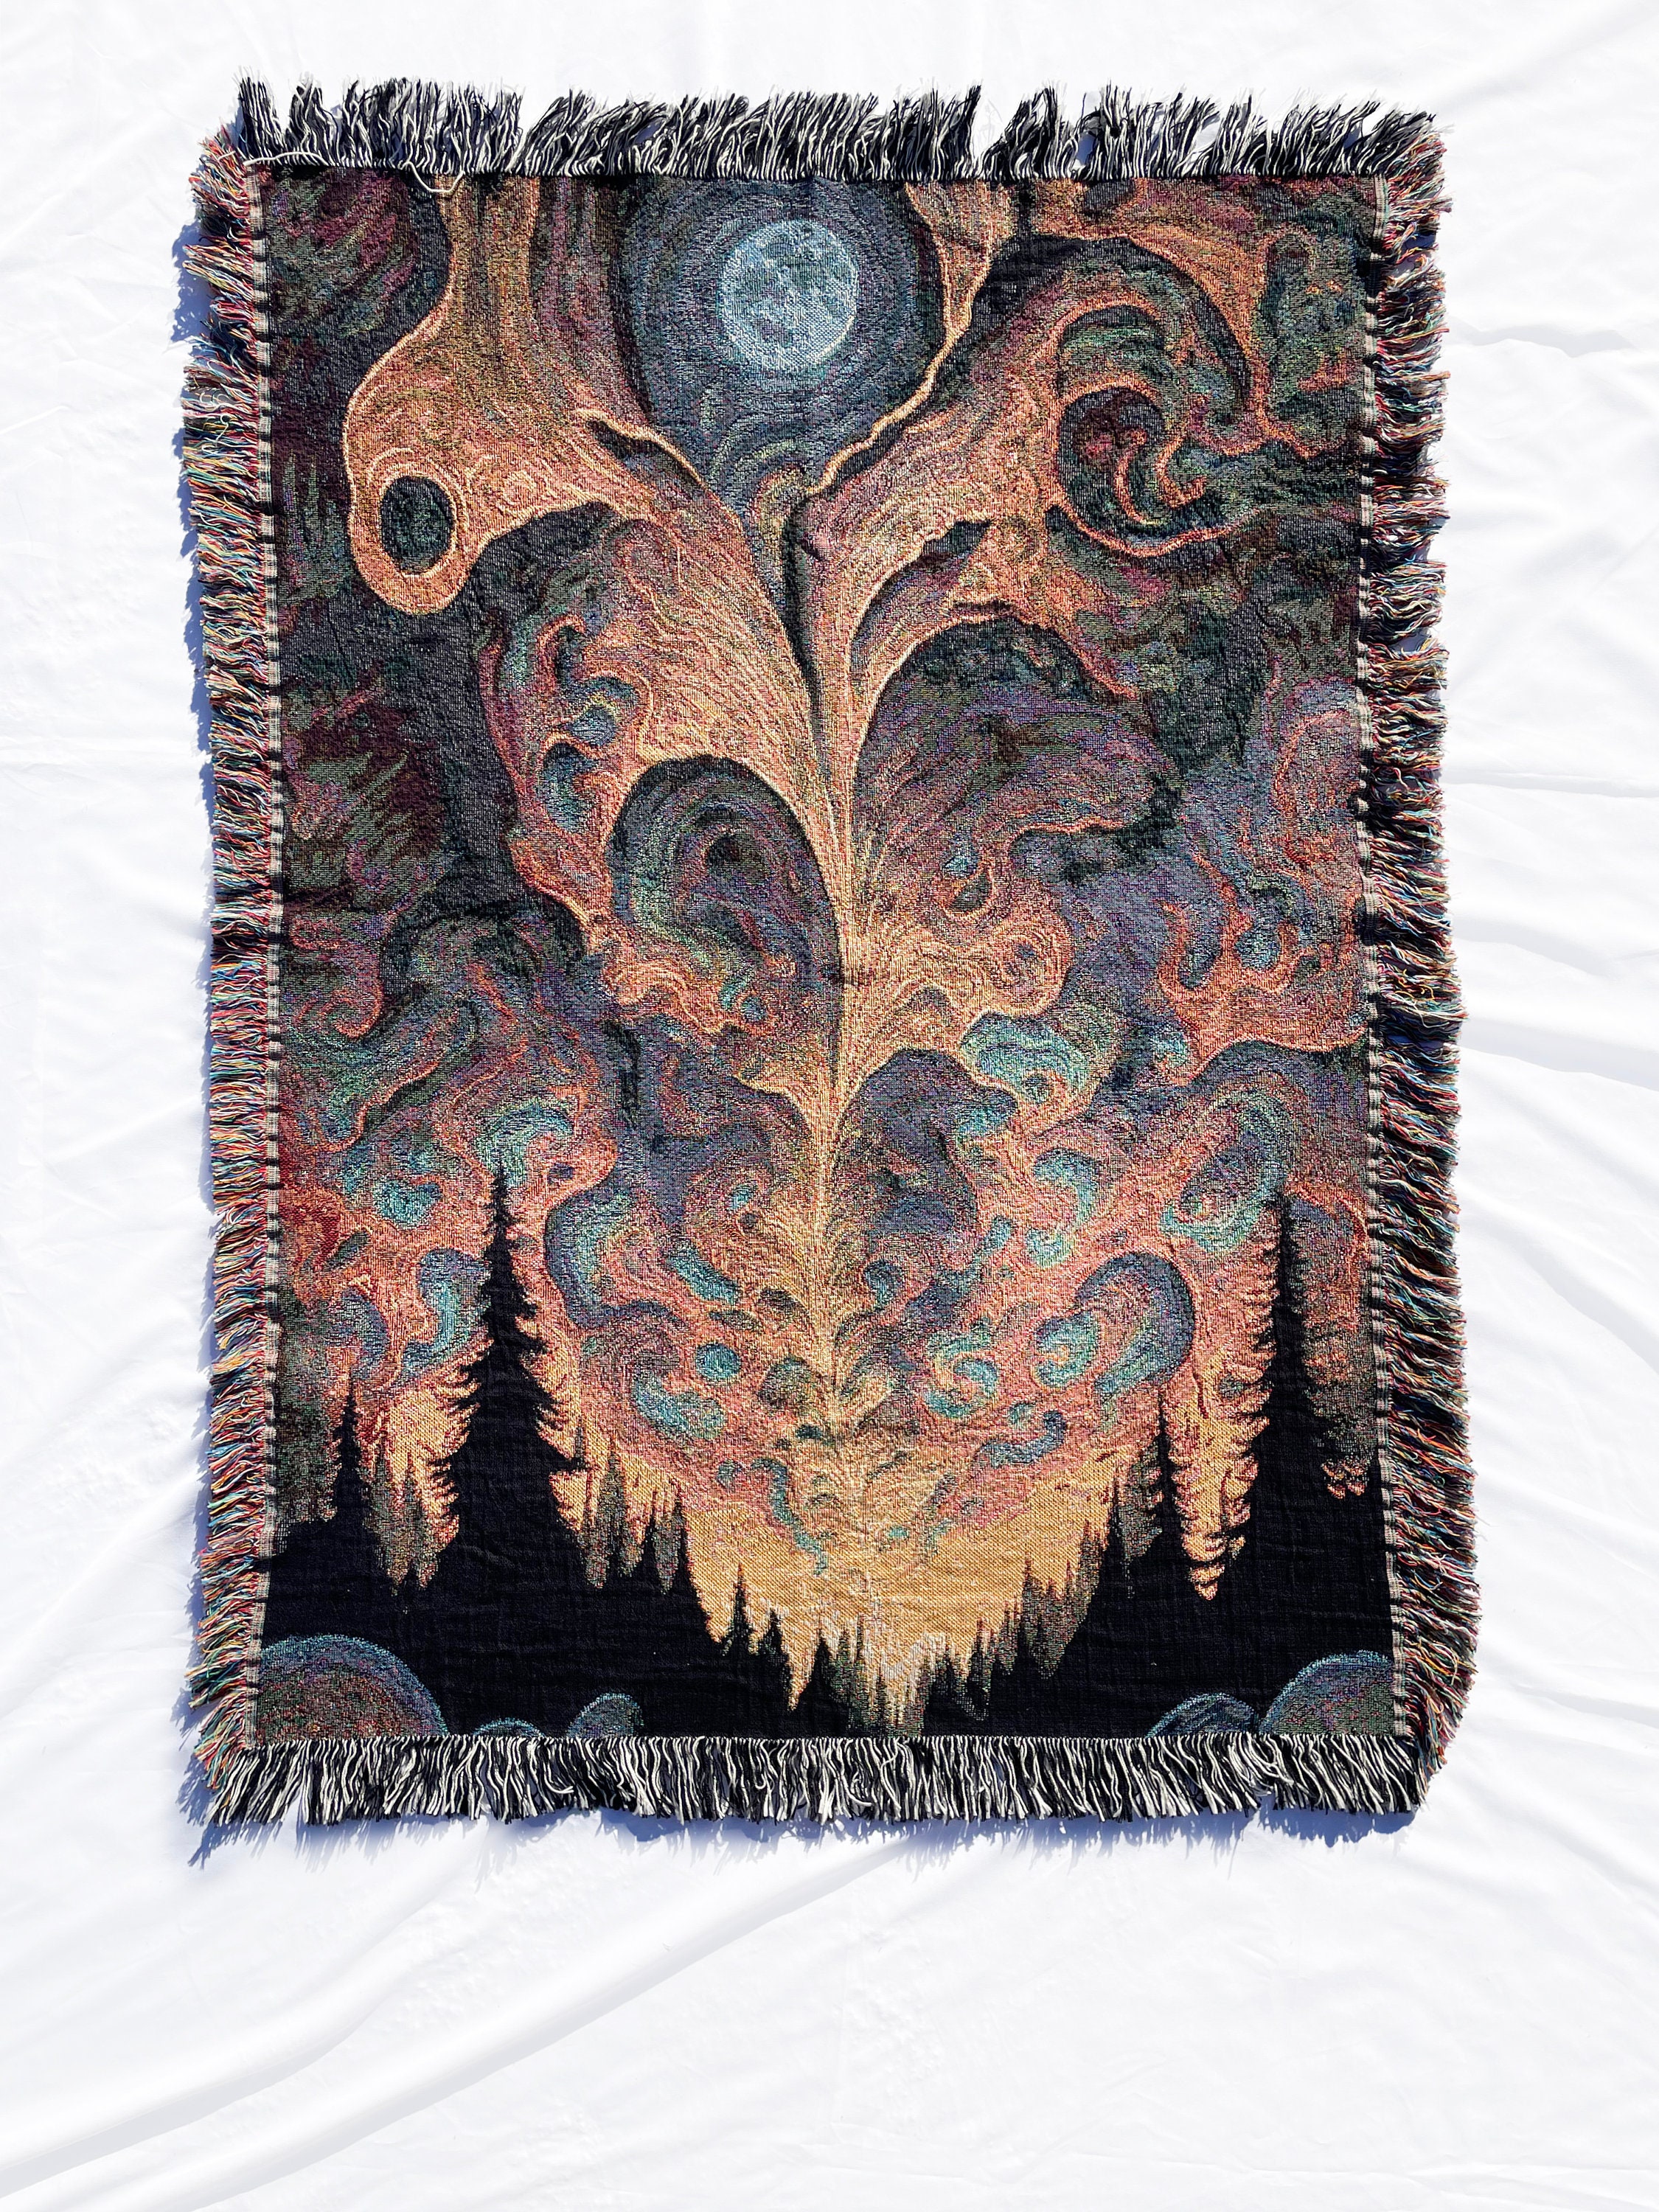 Mocha Skies Tapestry Throw Blanket Spiritual Wall Decor pic